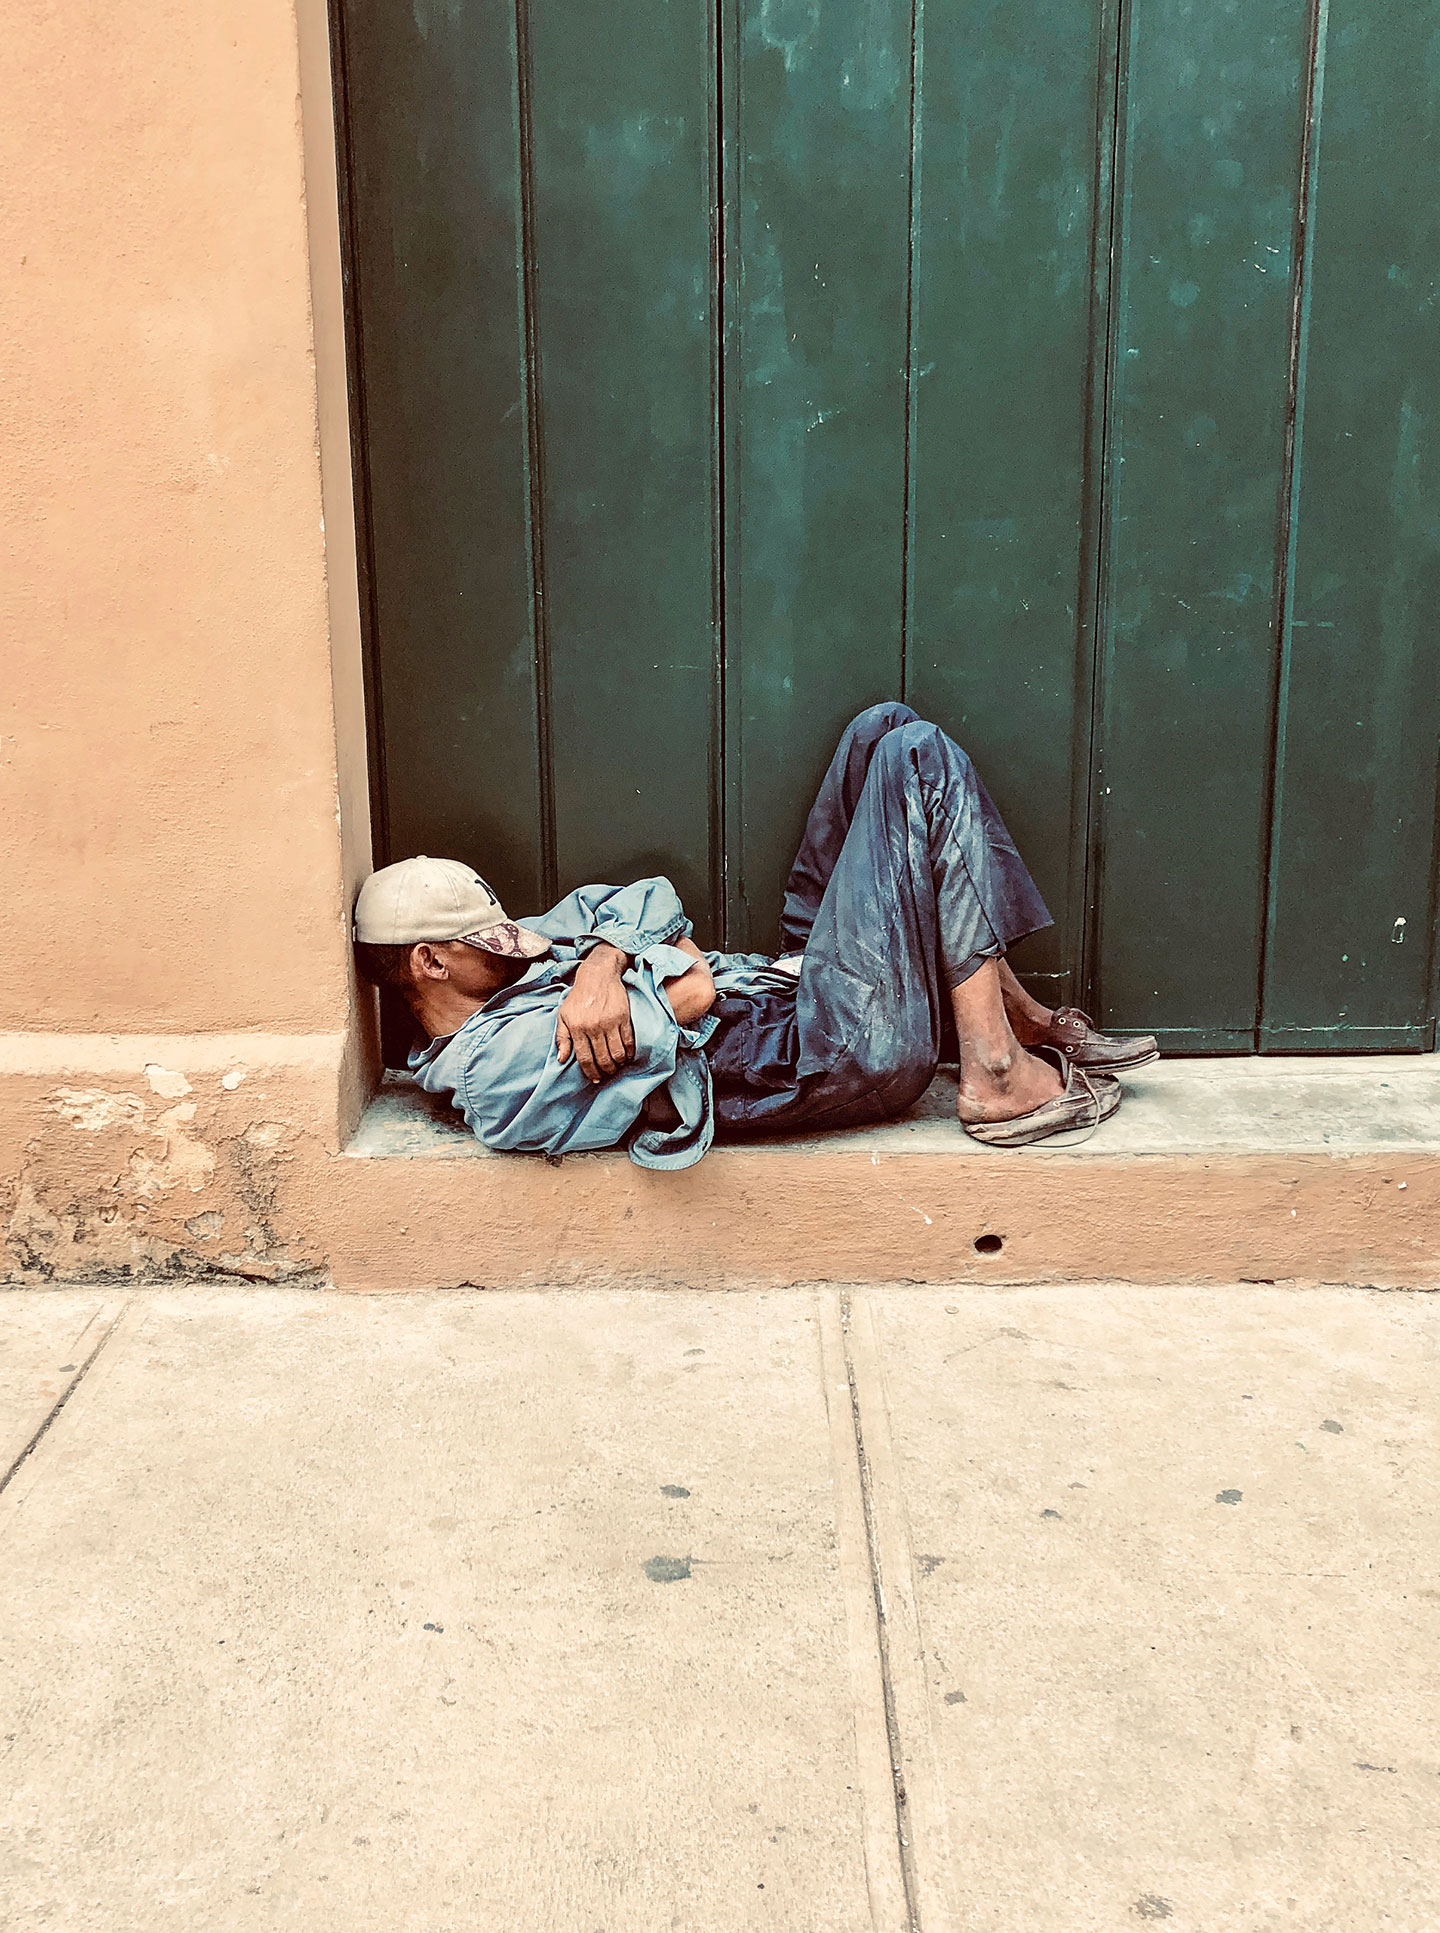 Homeless sleeping on the street in Havana, Cuba